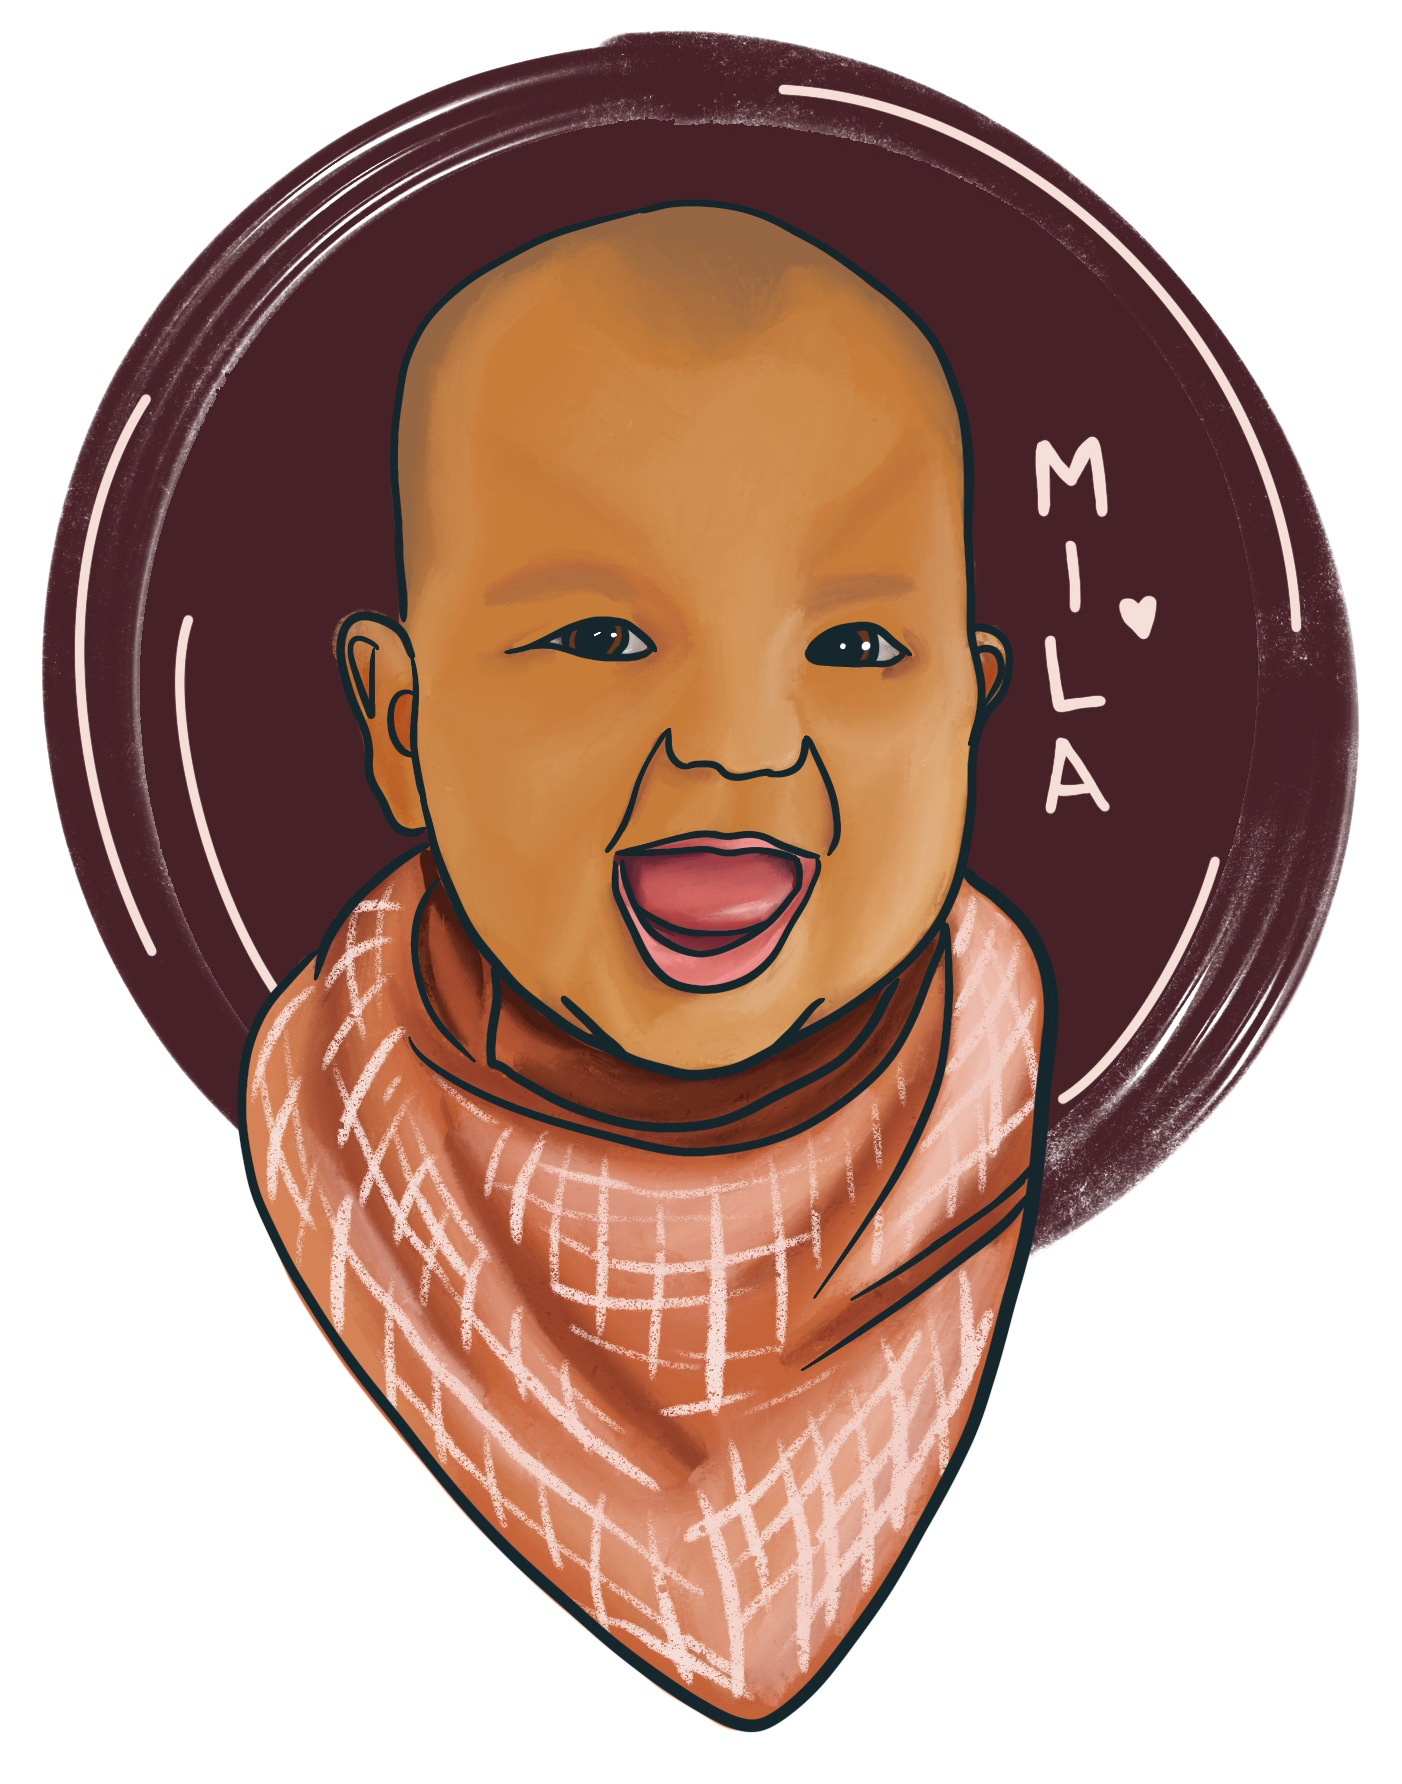 Mila - Procreate Illustration